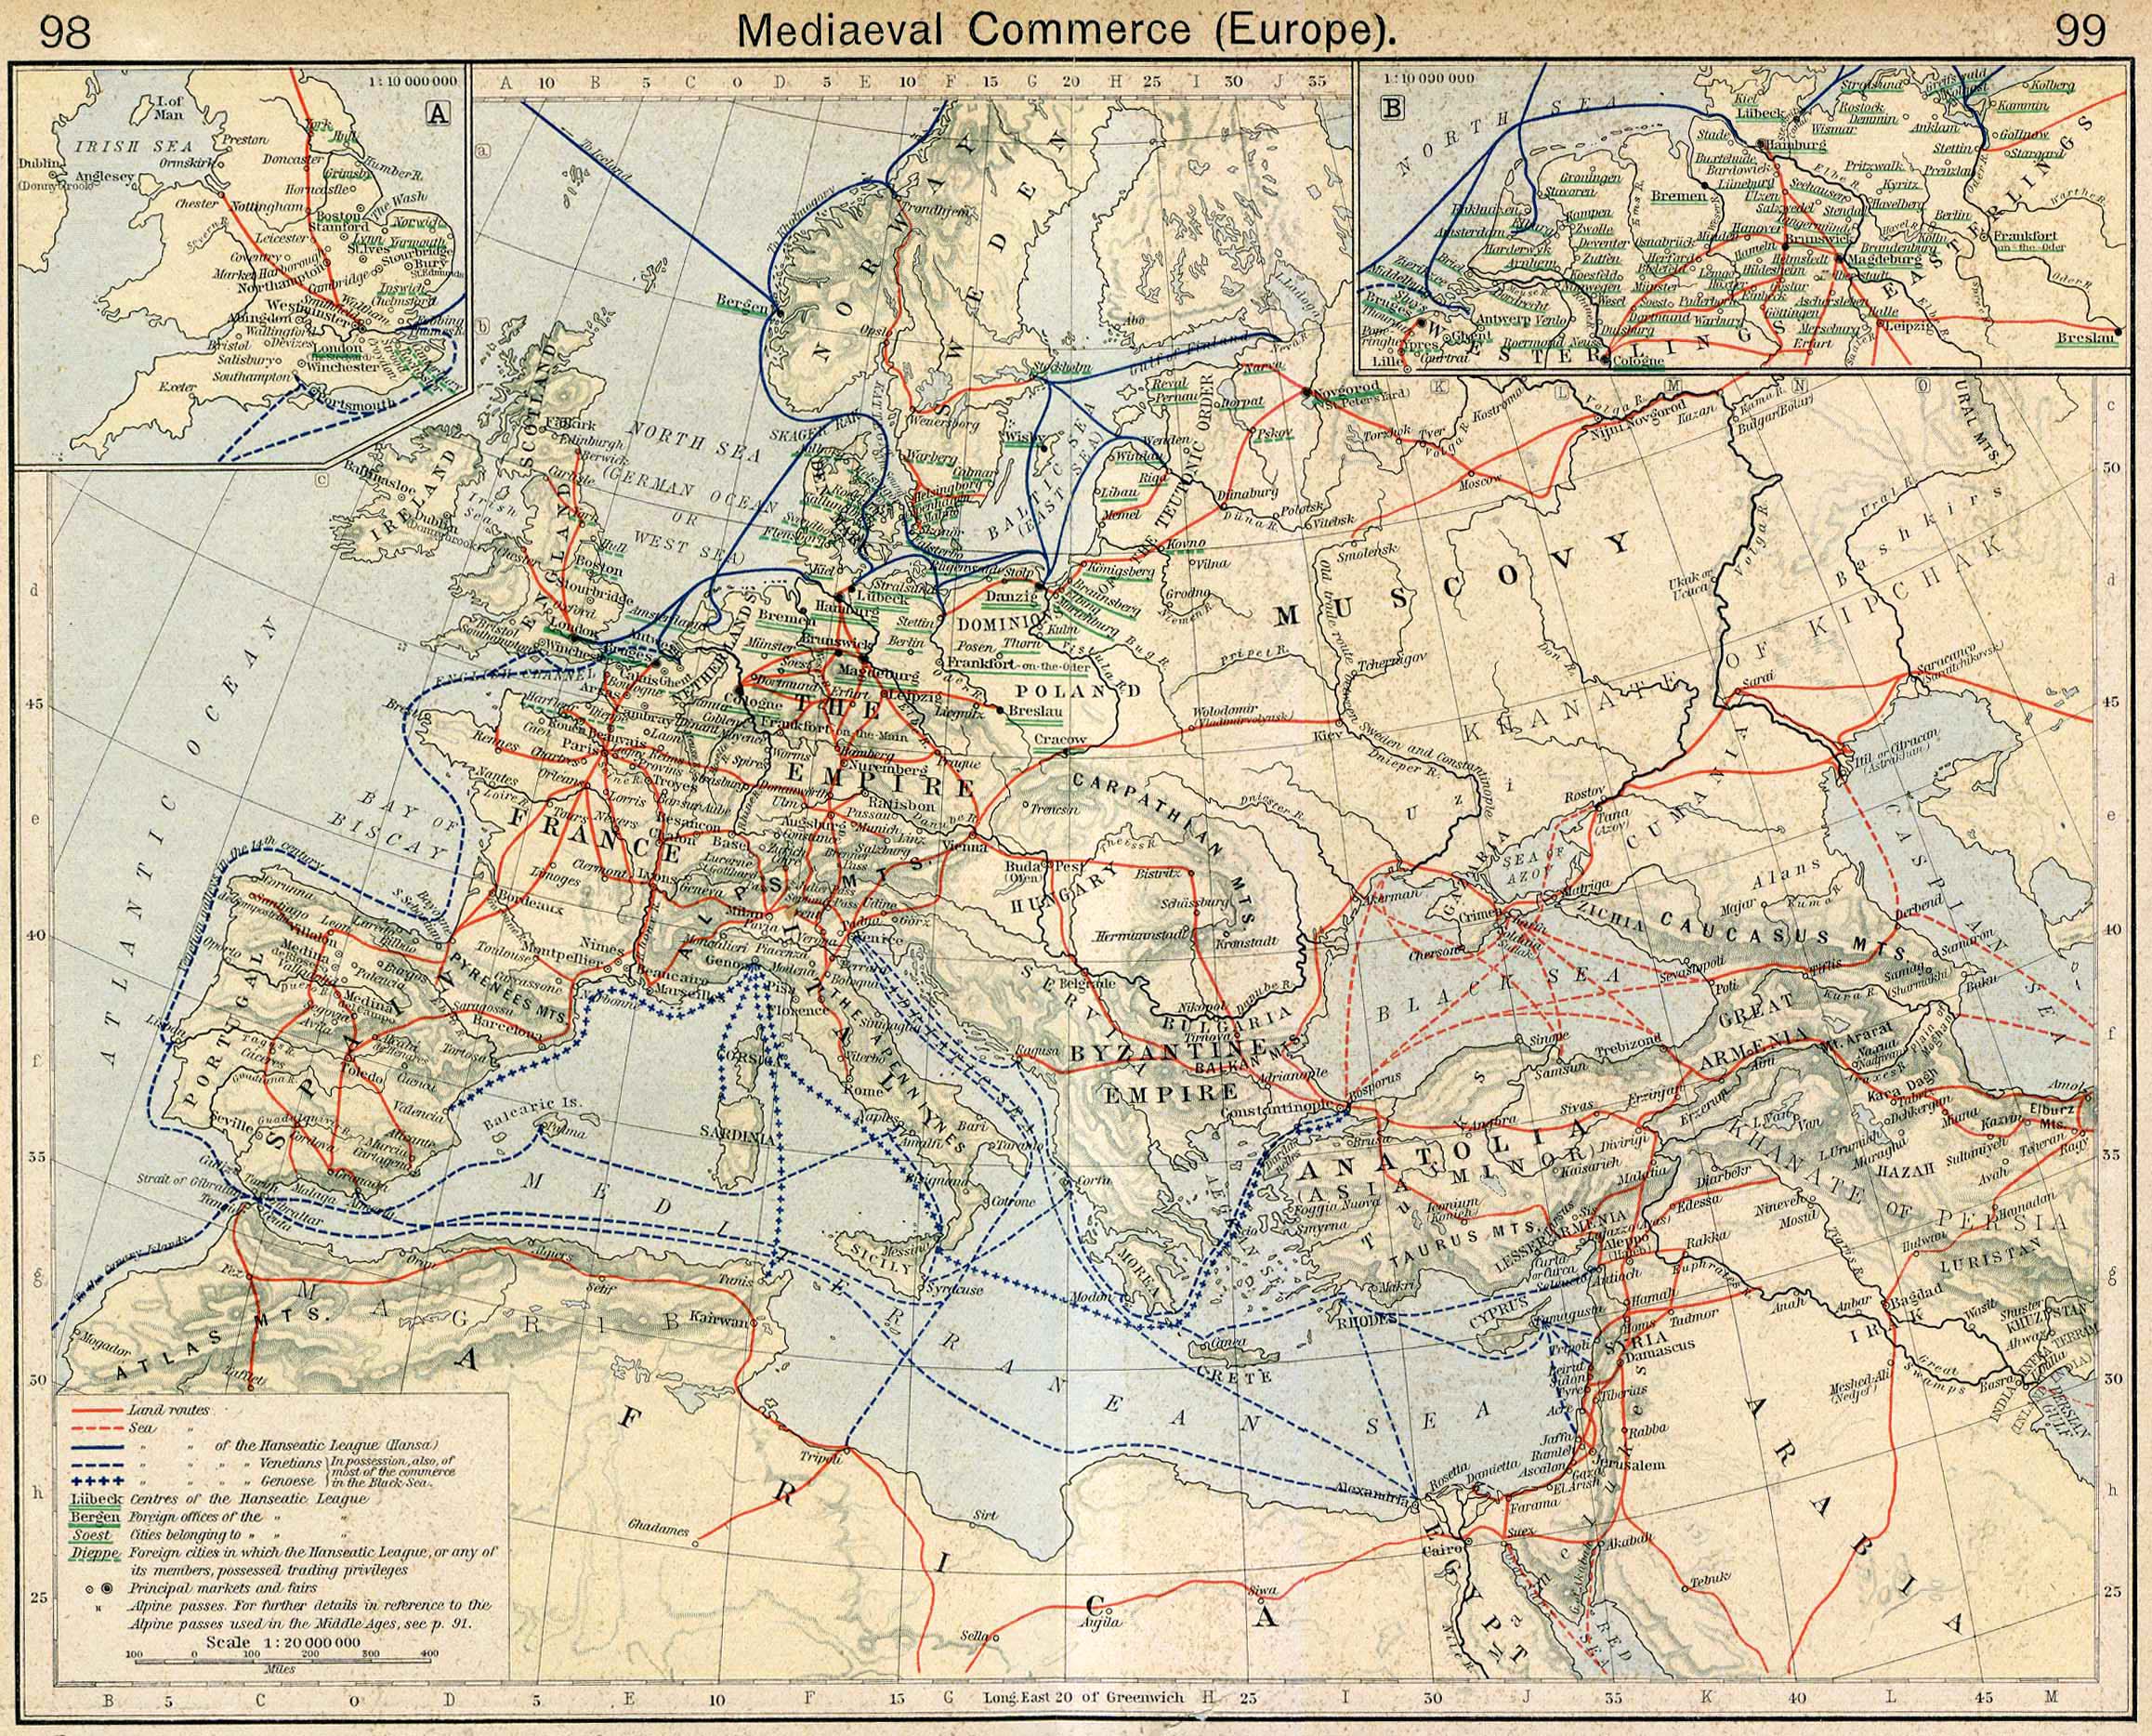 Map of Mediaeval Commerce in Europe